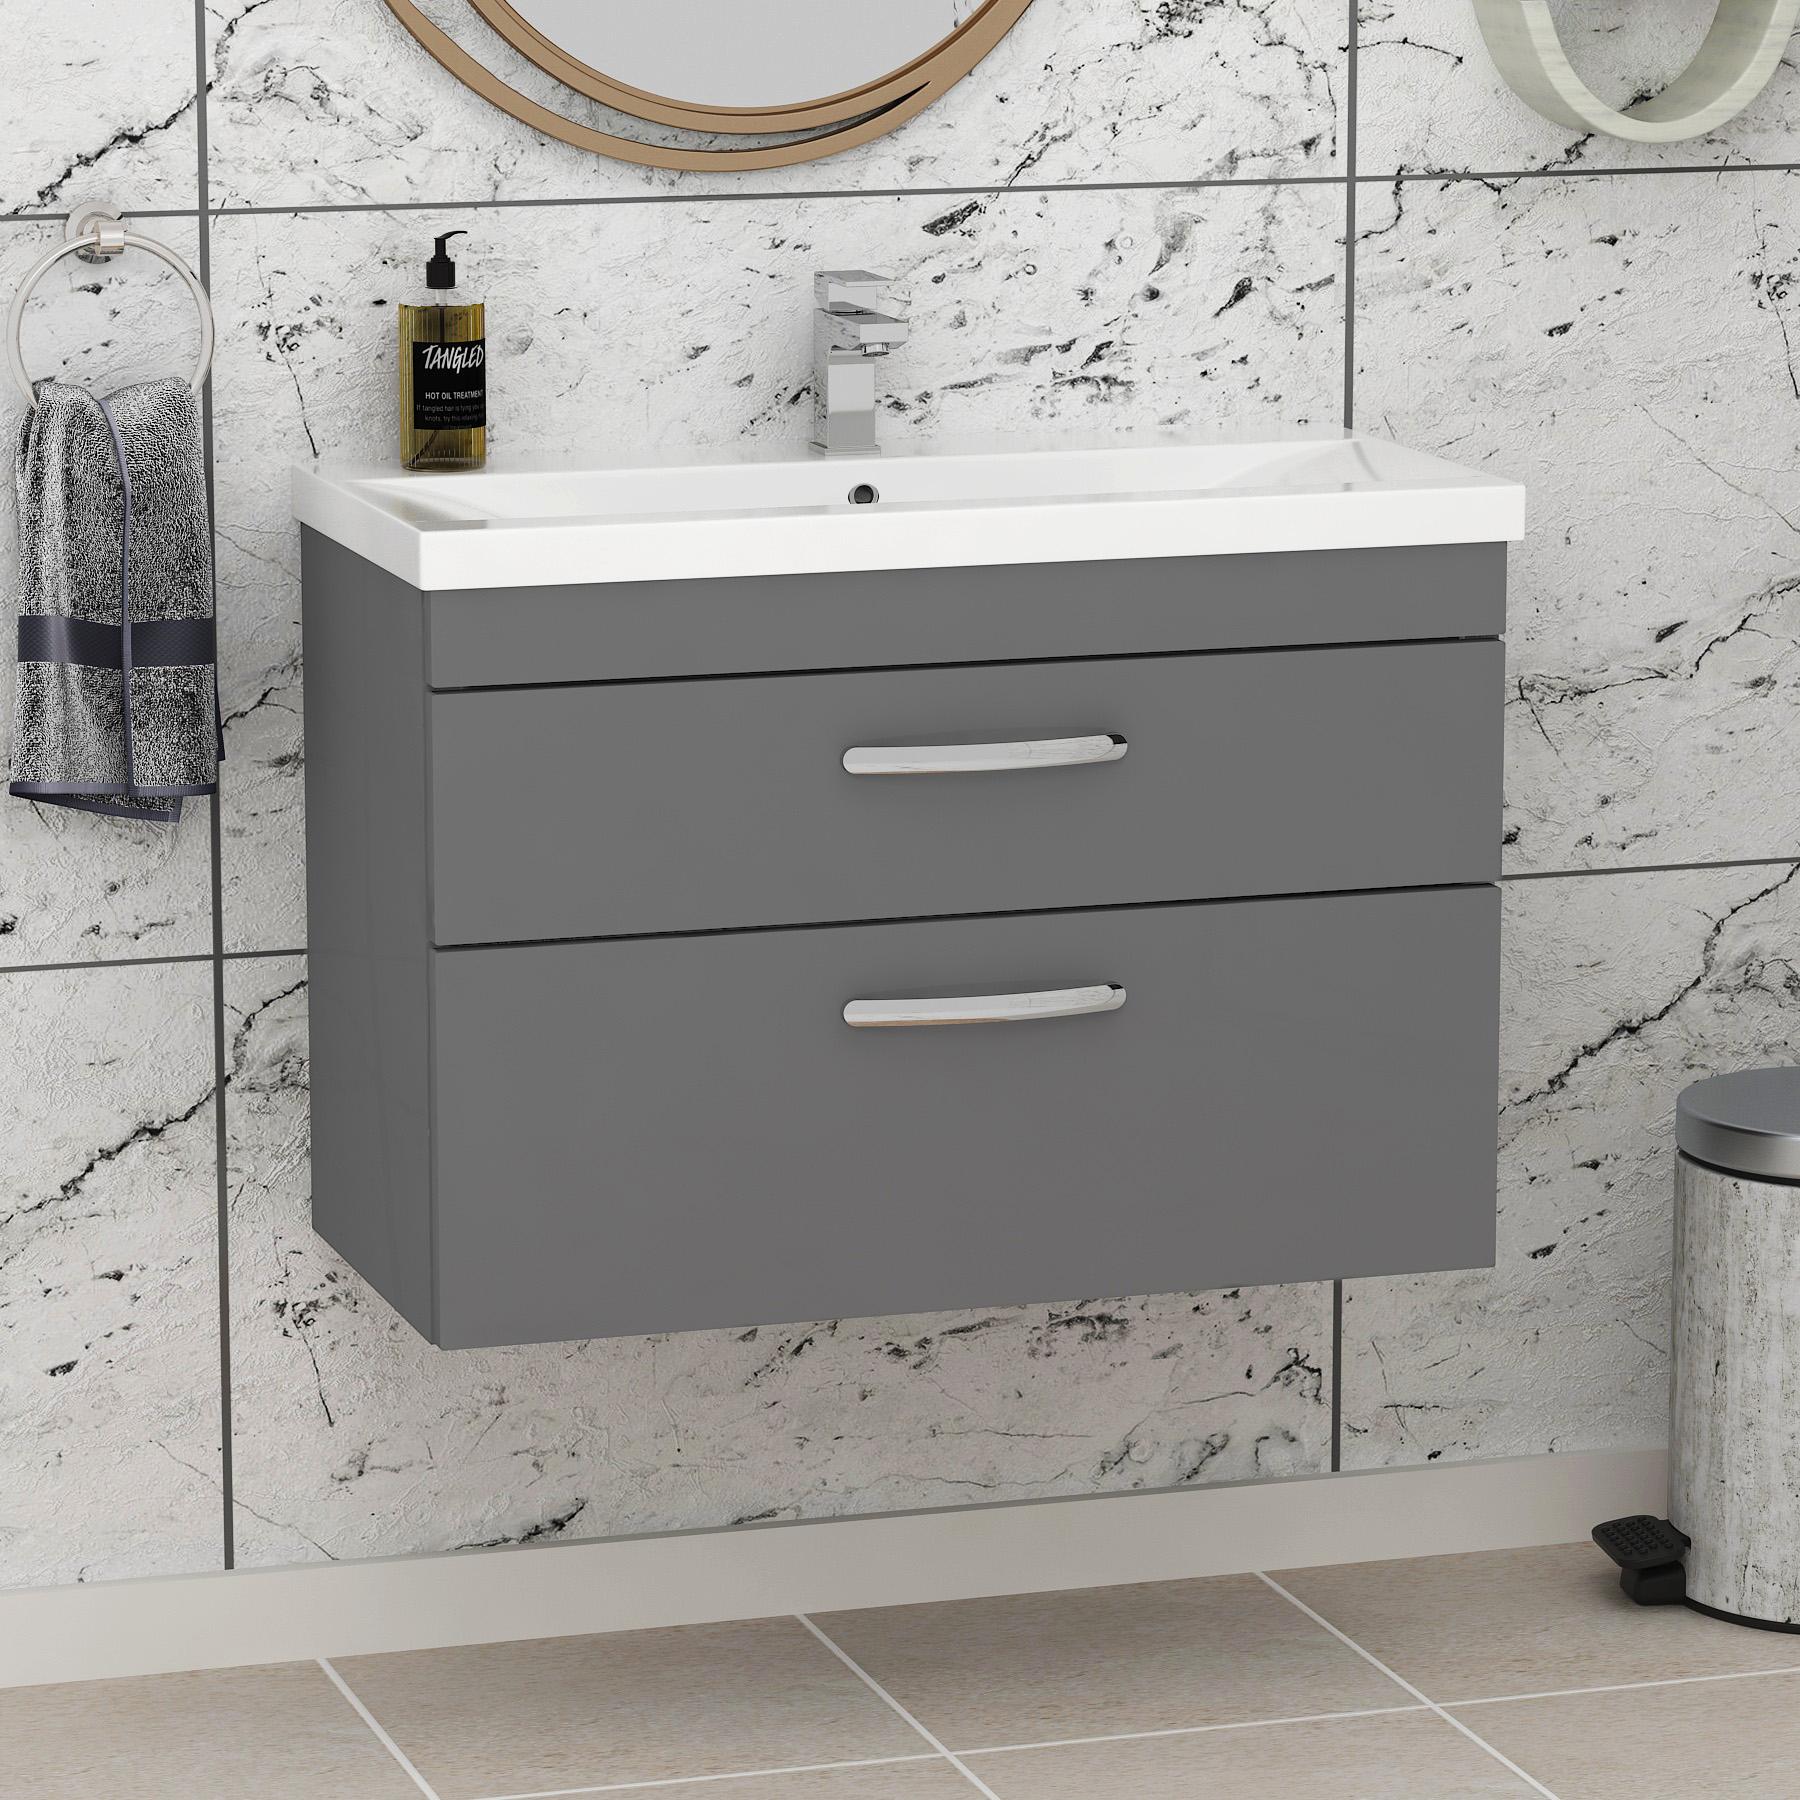 Vanity sink unit Keep the bathroom trendy with the online retailers